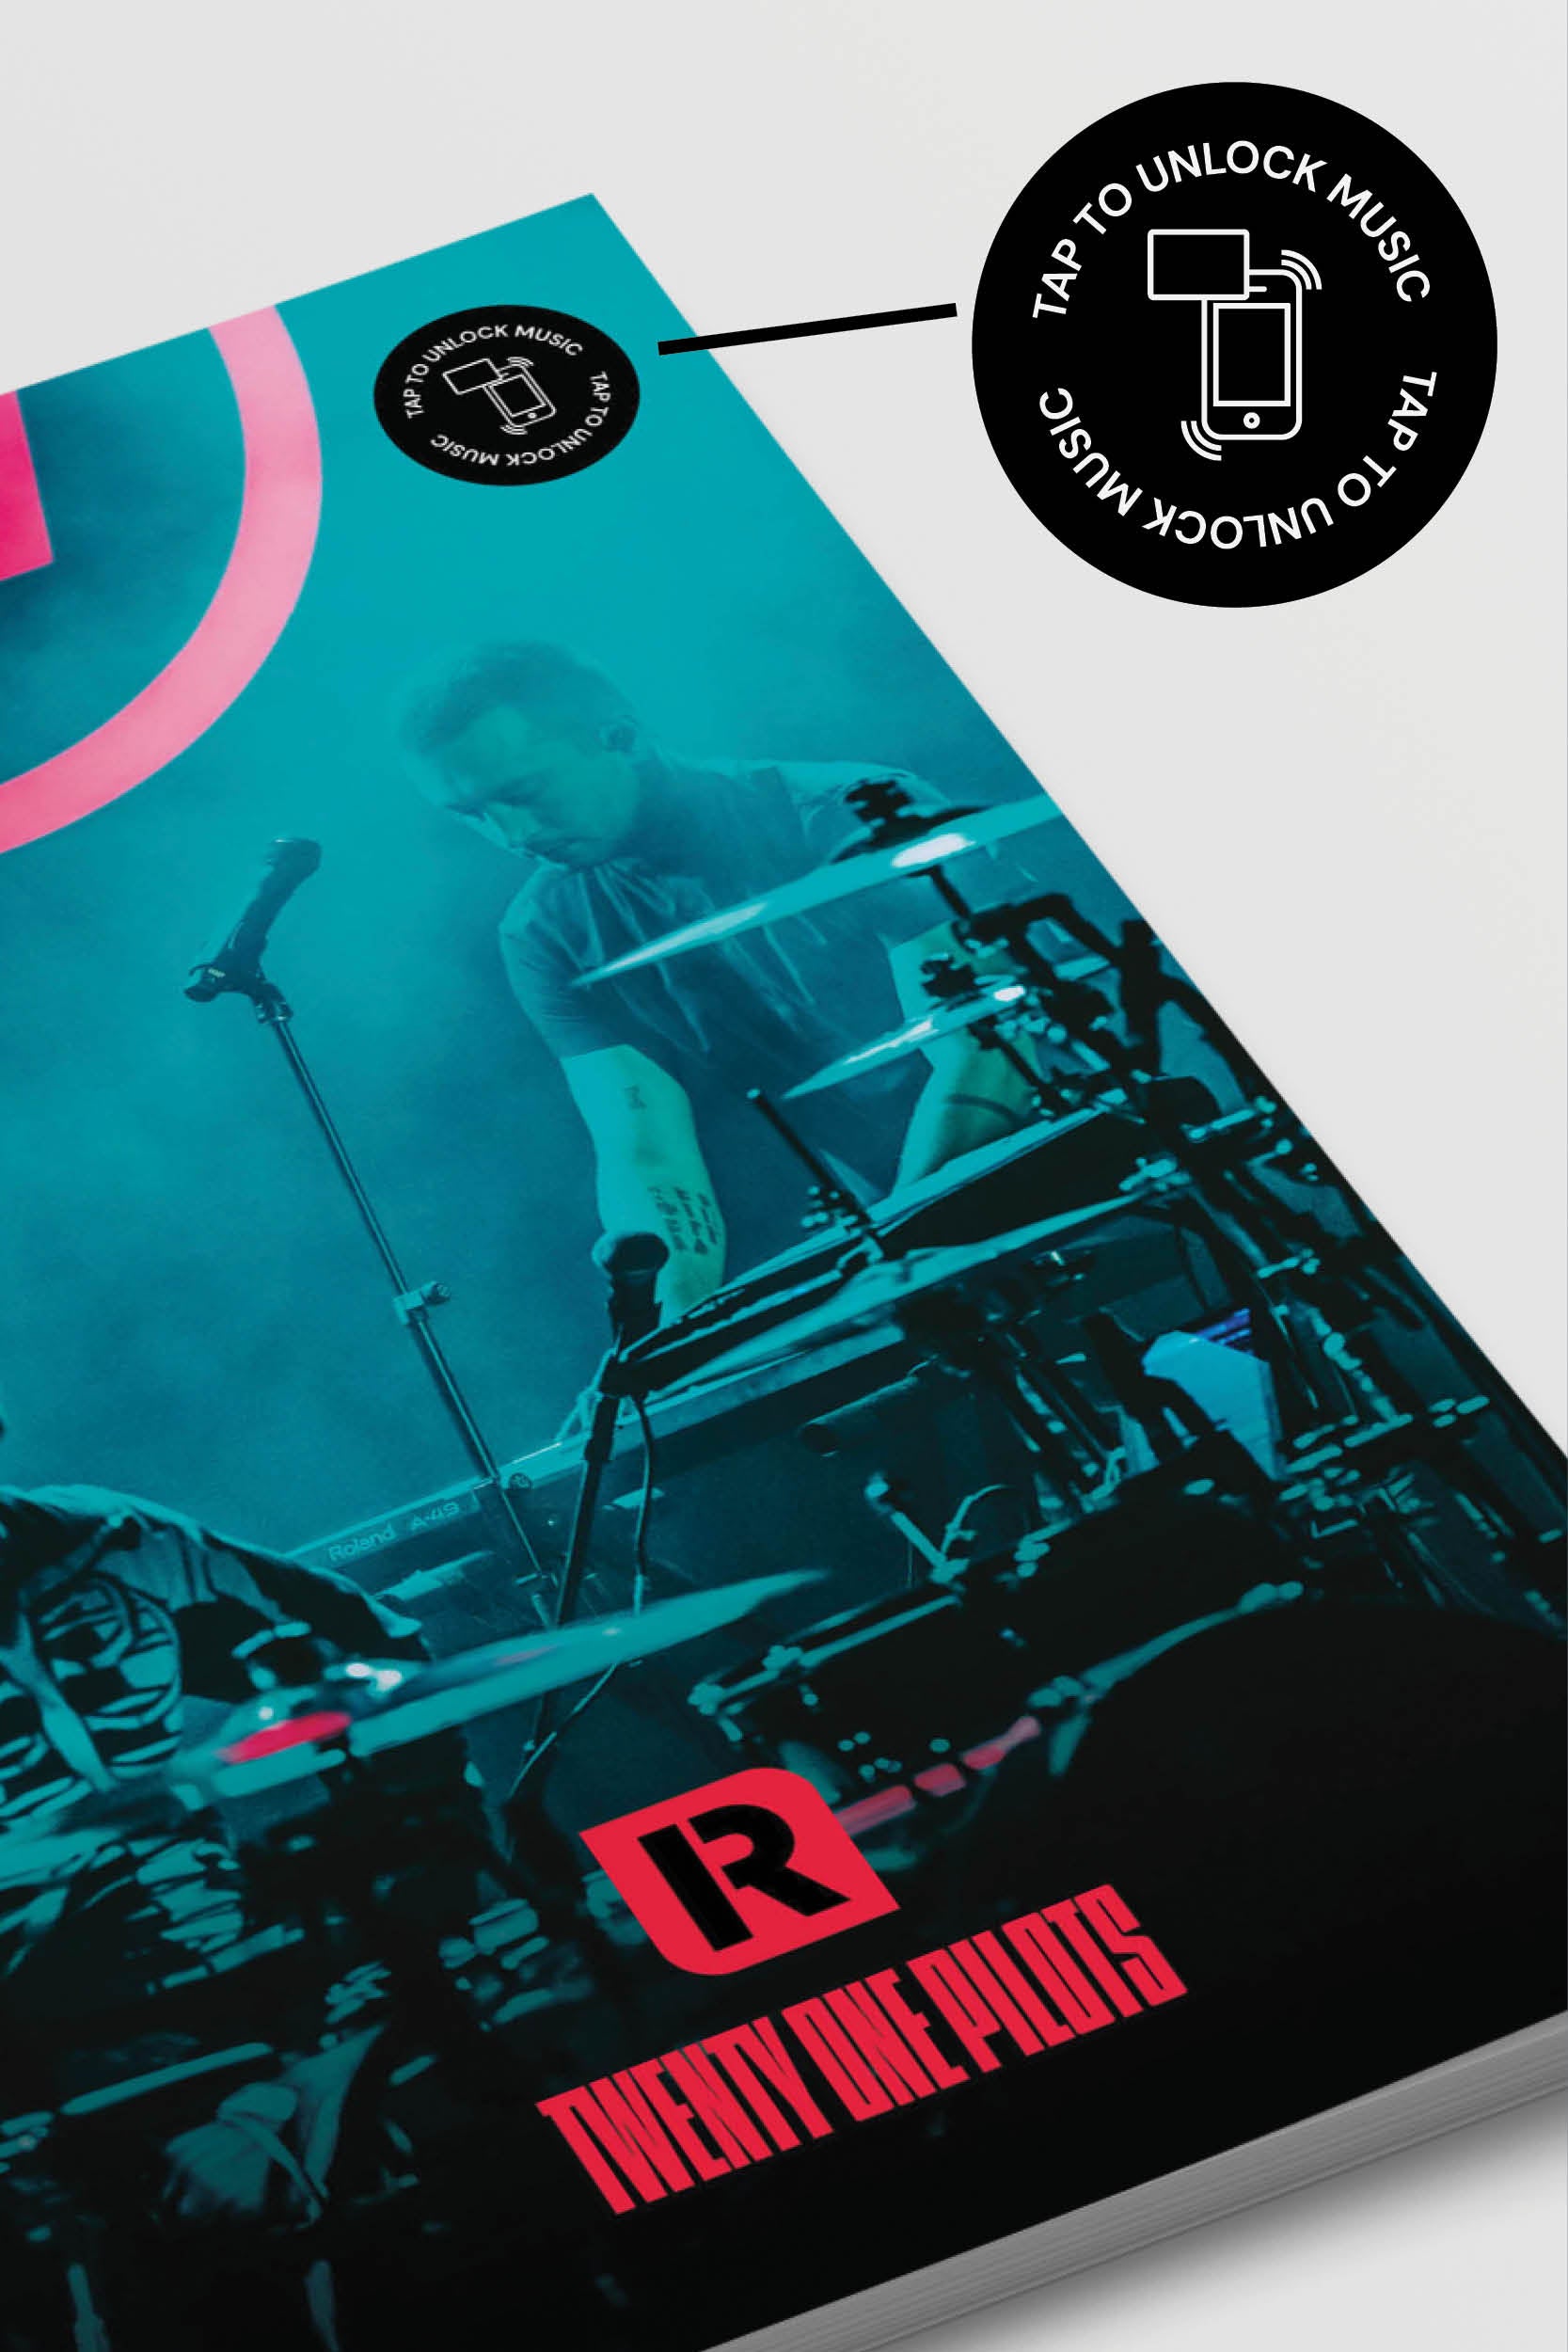 Twenty One Pilots: The Return To London Magazine & ‘Clancy' Digital Album